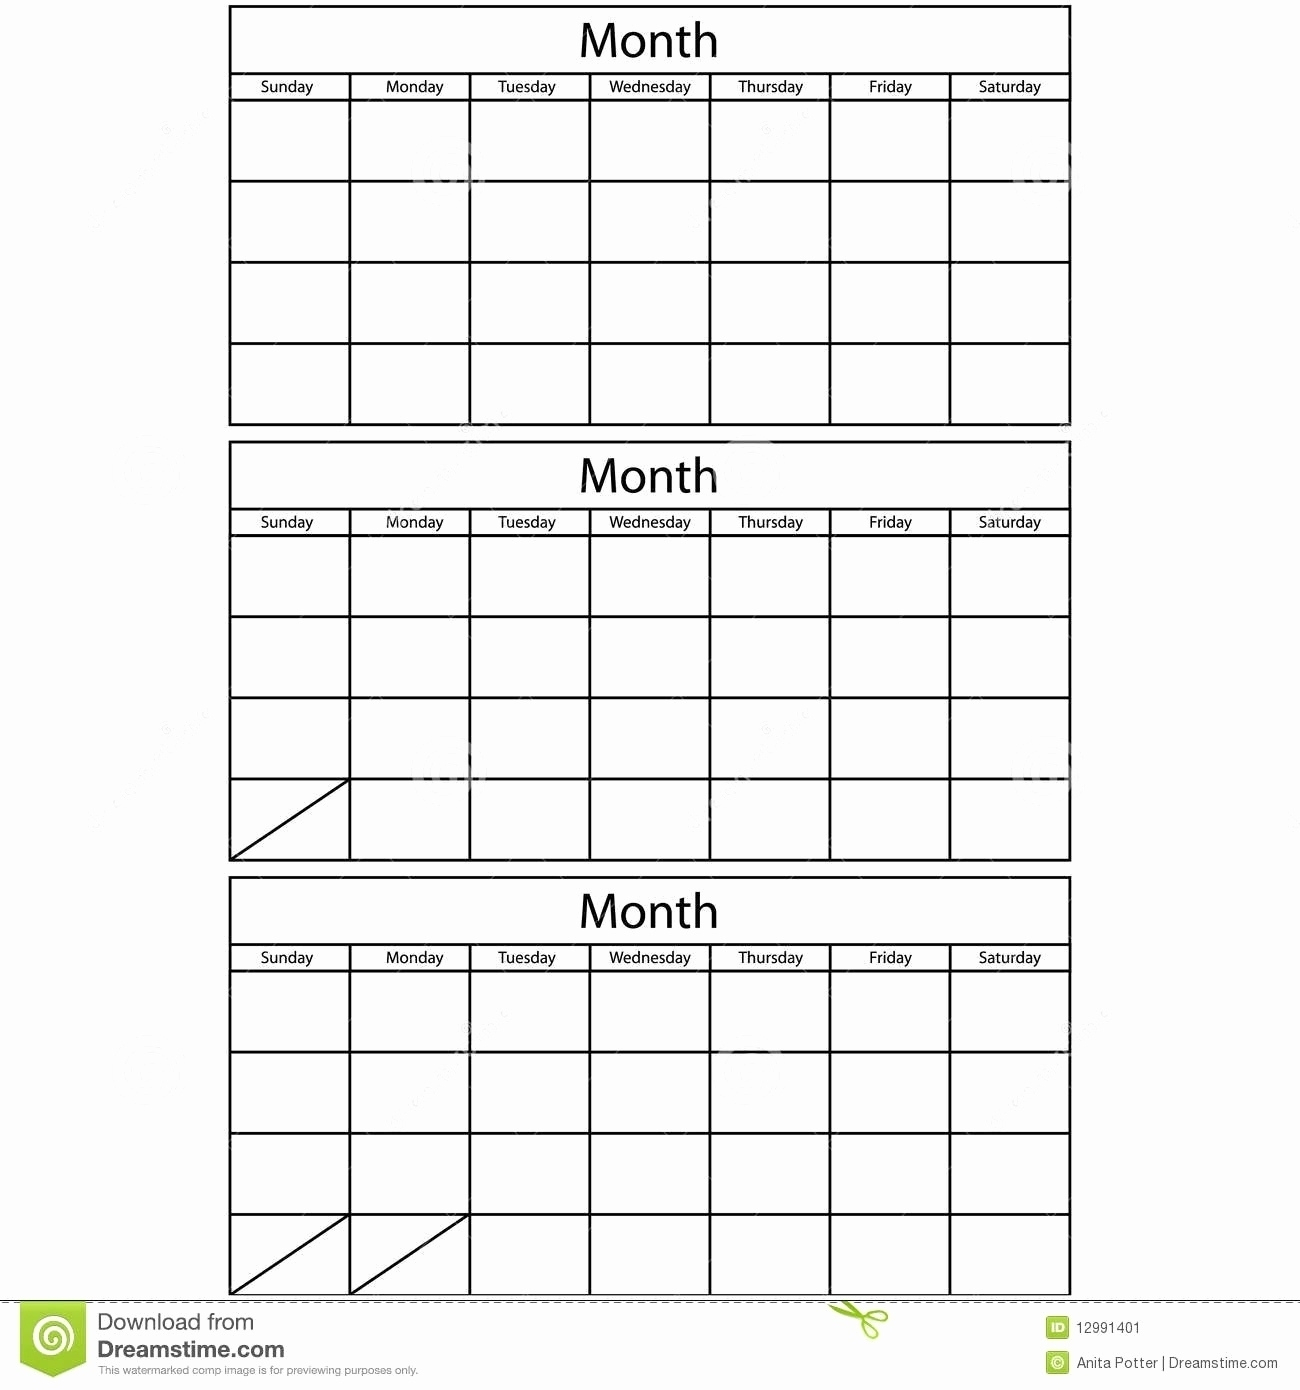 Free 3 Month Calendar Templates - Calendar Inspiration Design